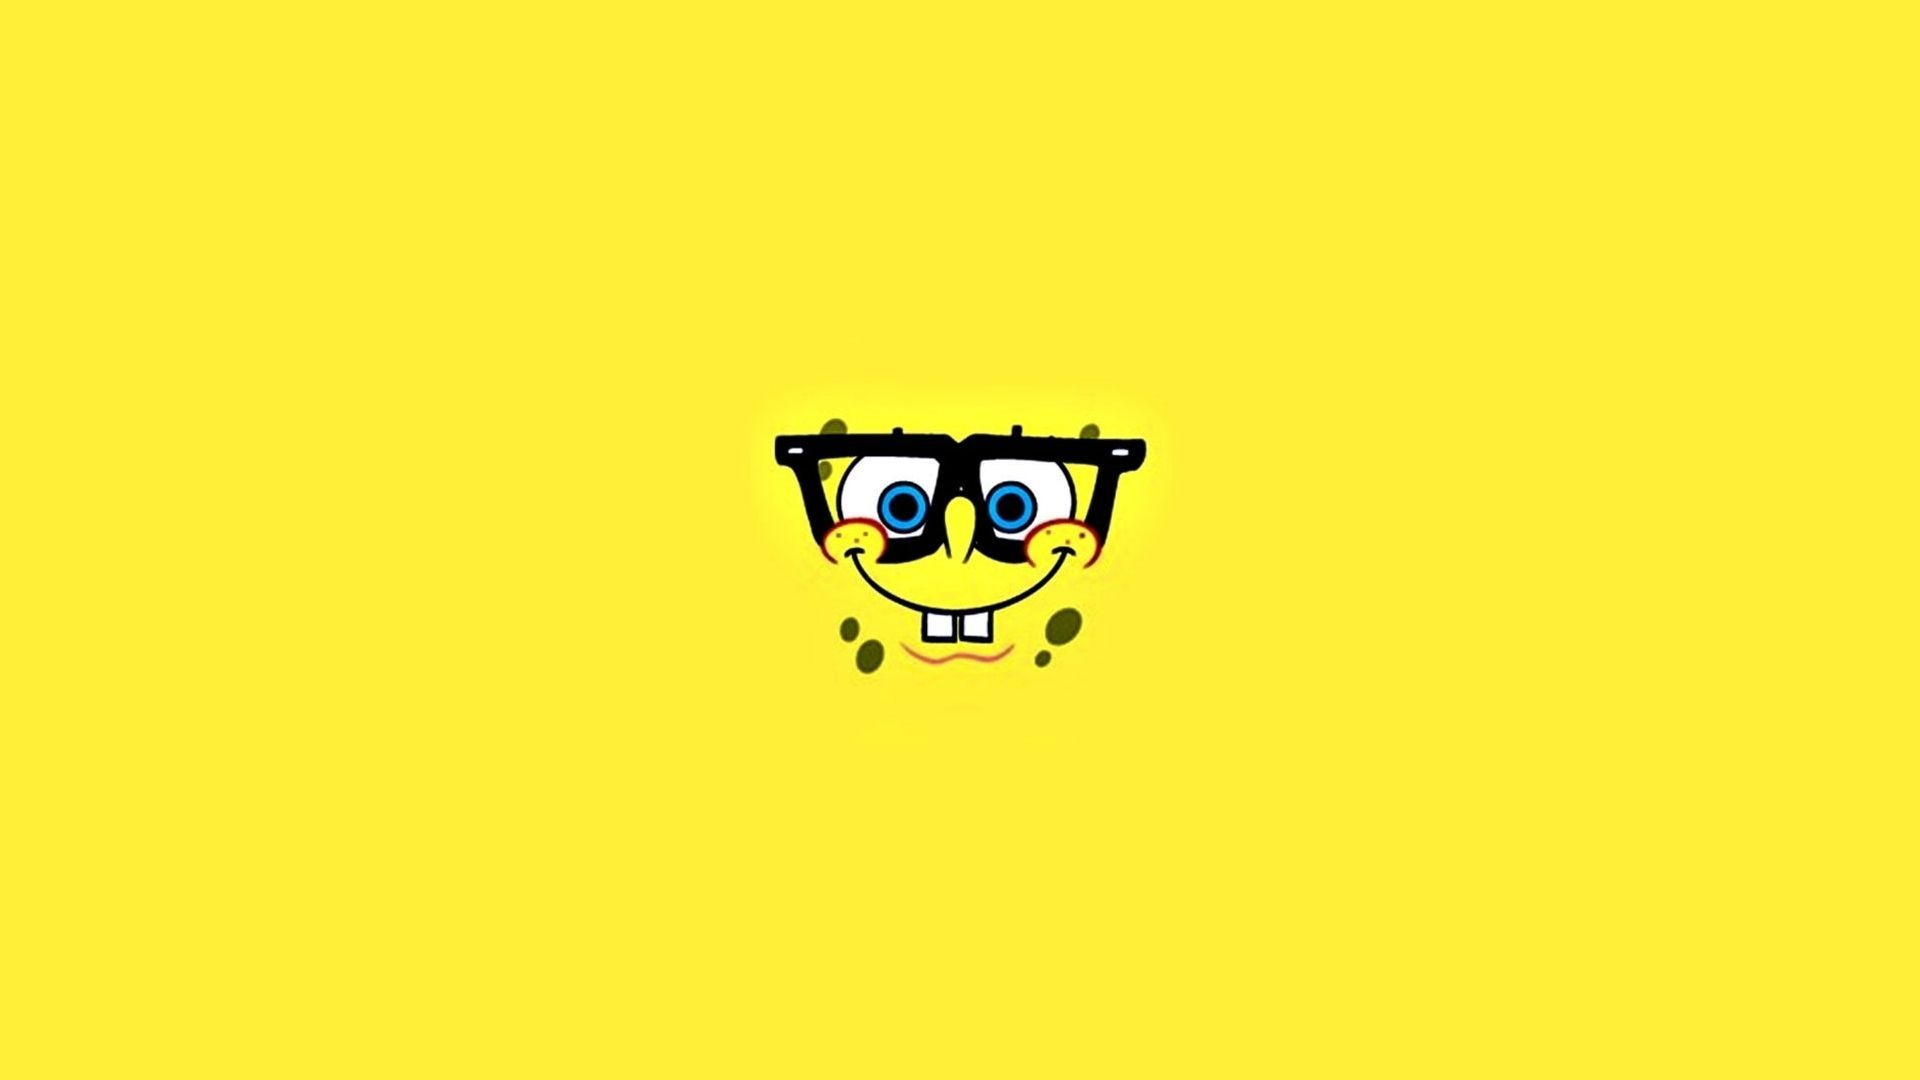 SpongeBob Face With Glasses Minimalist Wallpaper Wallpaper 1080p